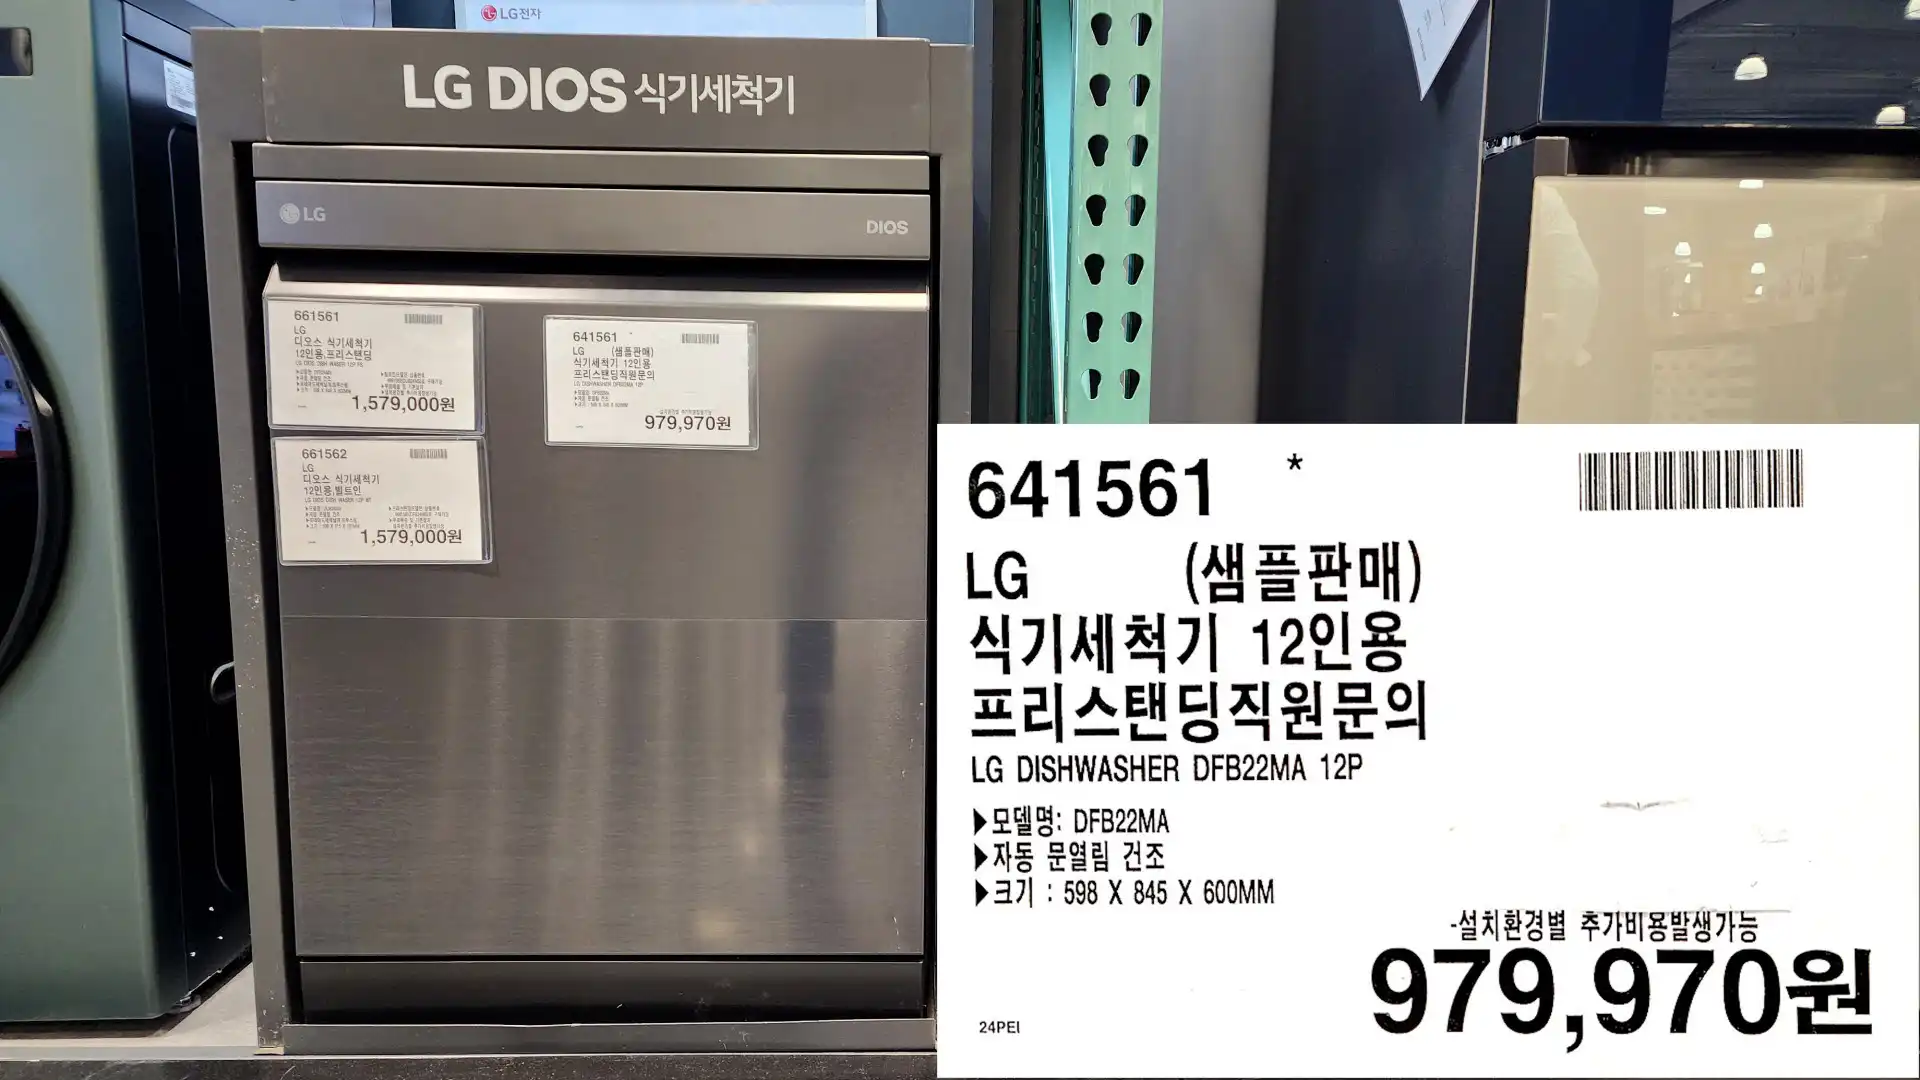 LG(샘플판매)
식기세척기 12인용
프리스탠딩직원문의
LG DISHWASHER DFB22MA 12P
▶ 모델명: DFB22MA
▶자동 문열림 건조
▶크기 : 598 X 845 X 600MM
▶설치환경별 추가비용발생가능
979&#44;970원